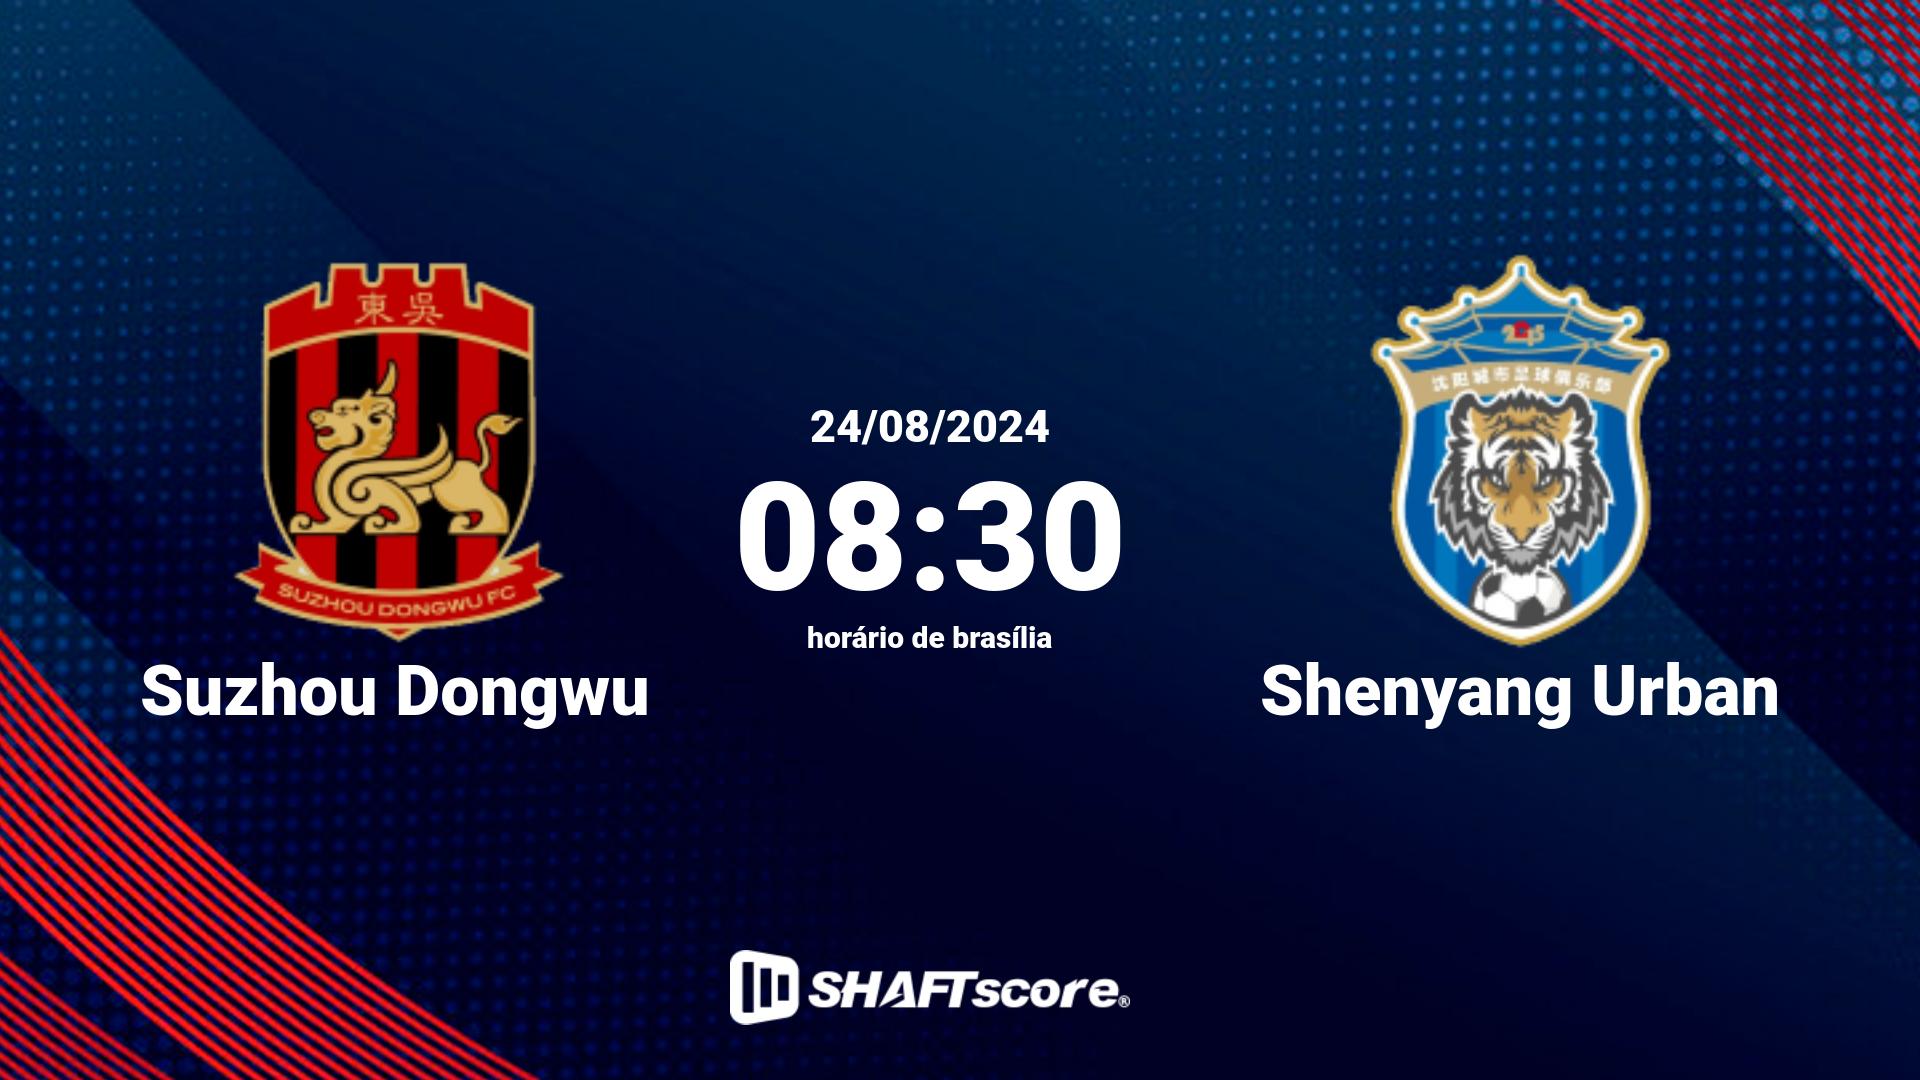 Estatísticas do jogo Suzhou Dongwu vs Shenyang Urban 24.08 08:30